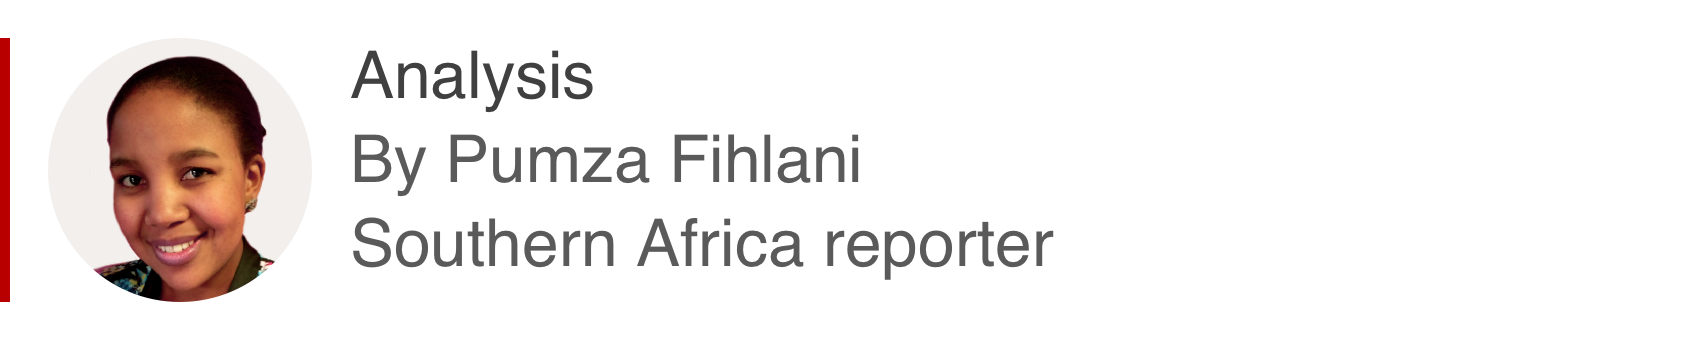 Analysis box by Pumza Fihlani, southern Africa reporter